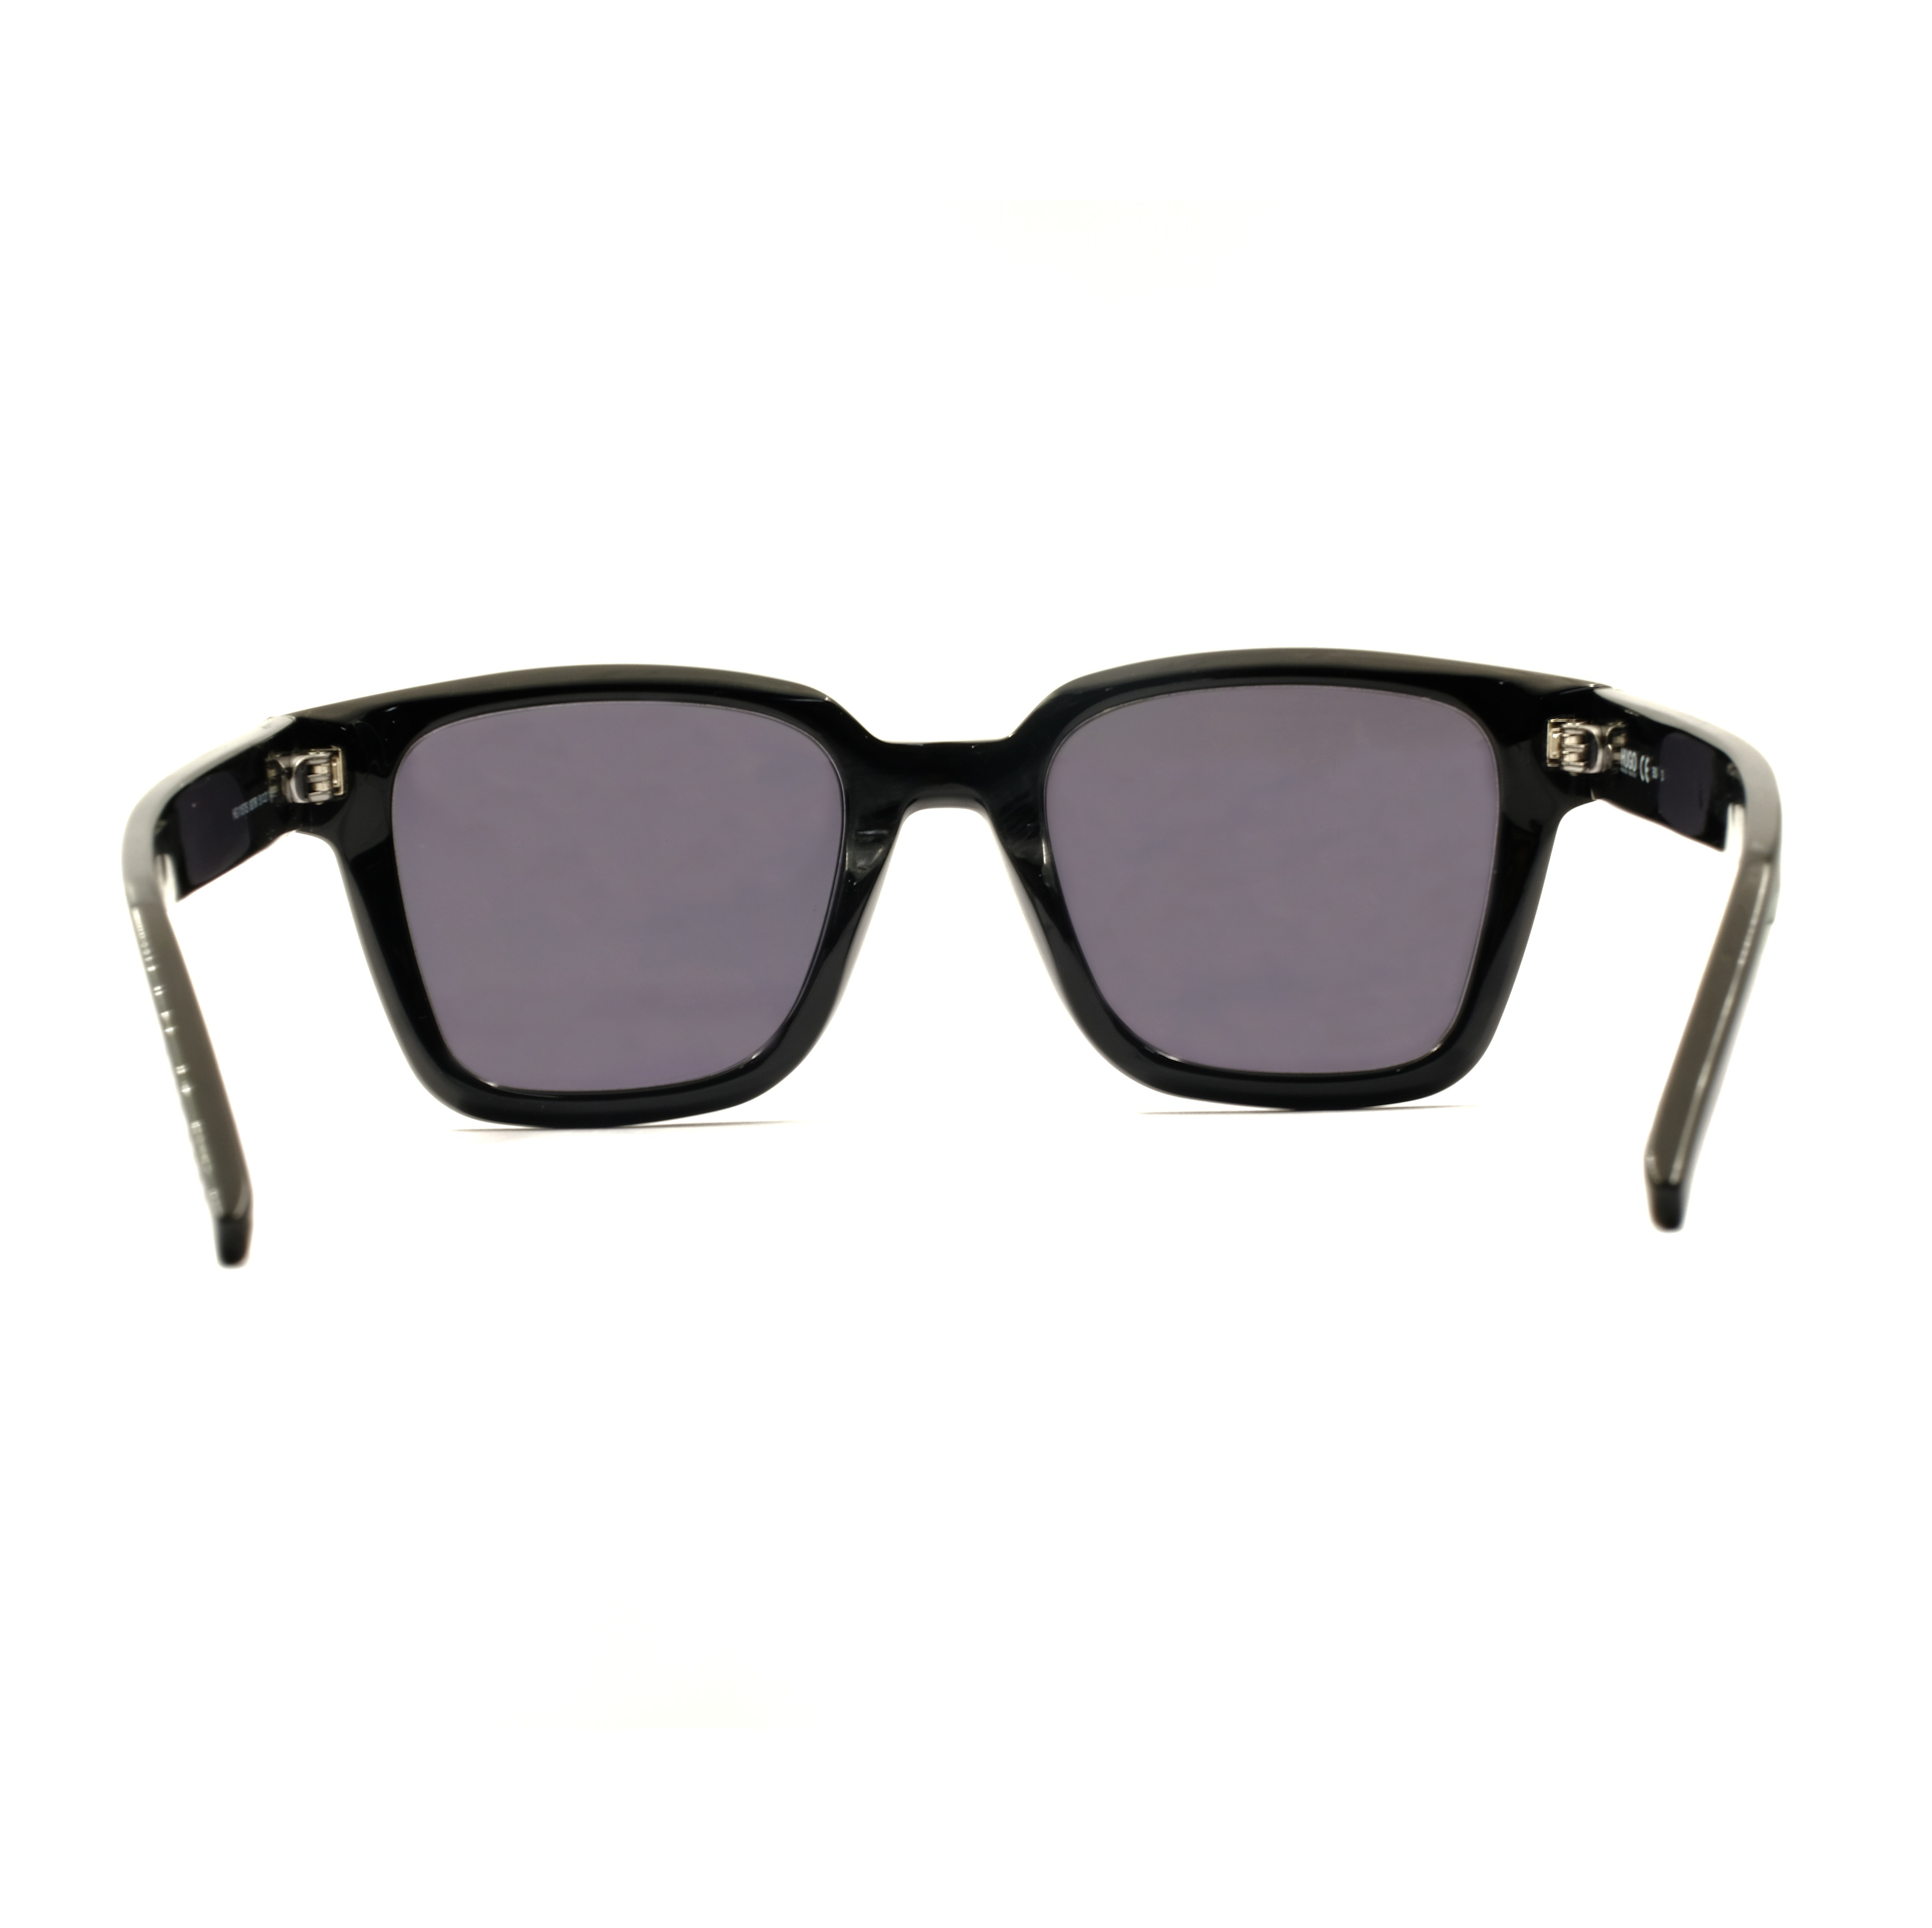 Black Square Custom Sunglasses Sun Glasses River High Quality Sunglasses Factory Direct Spectacles